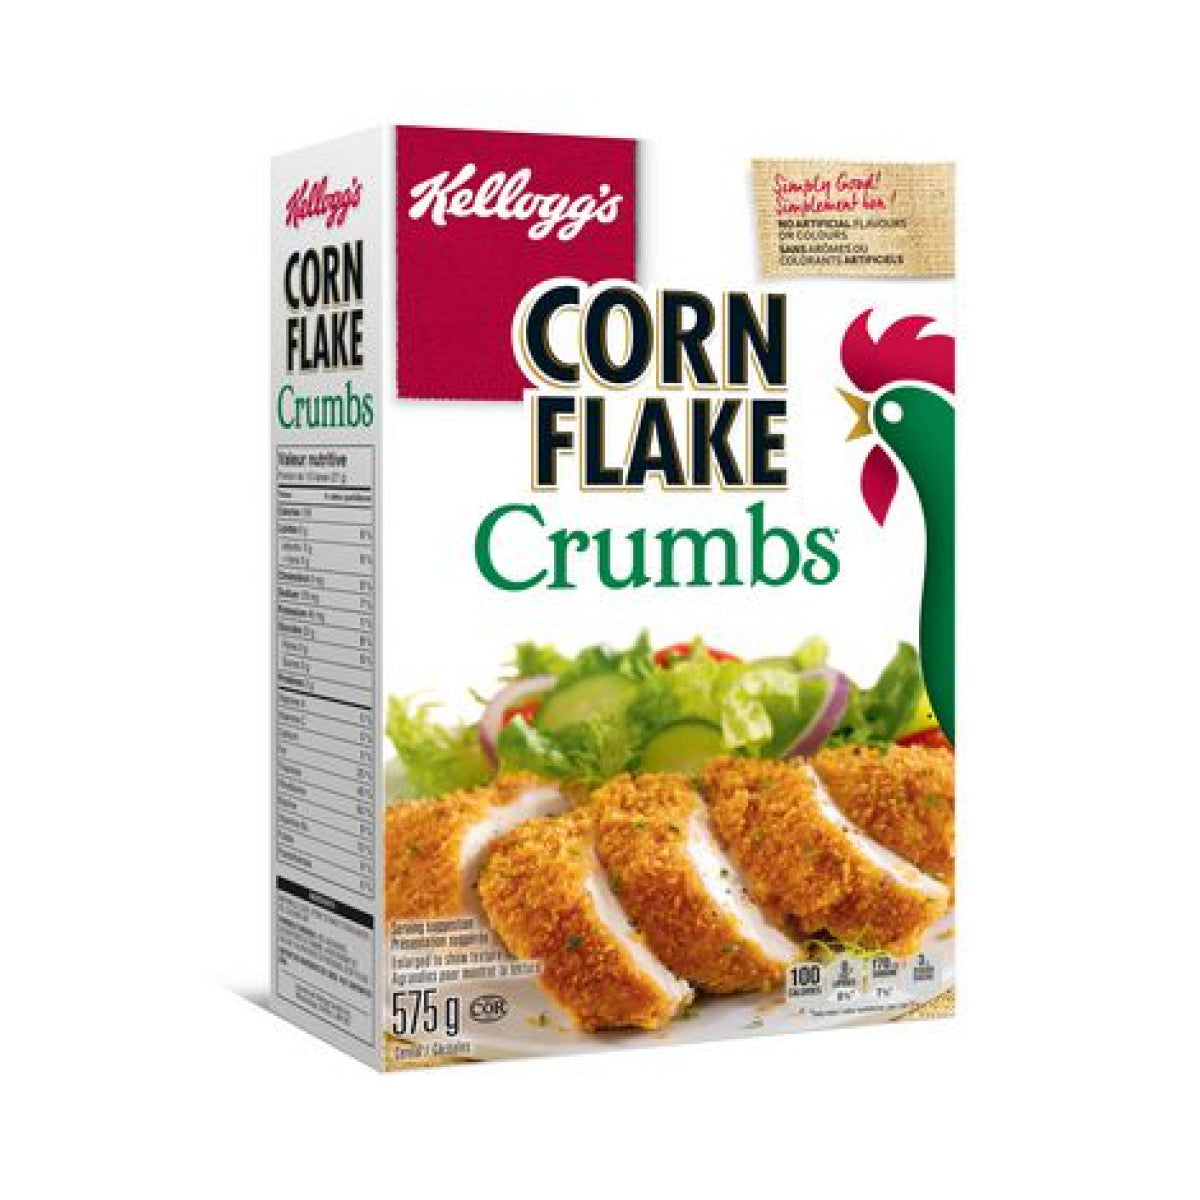 Kellogg's Corn Flake Crumbs, 575g